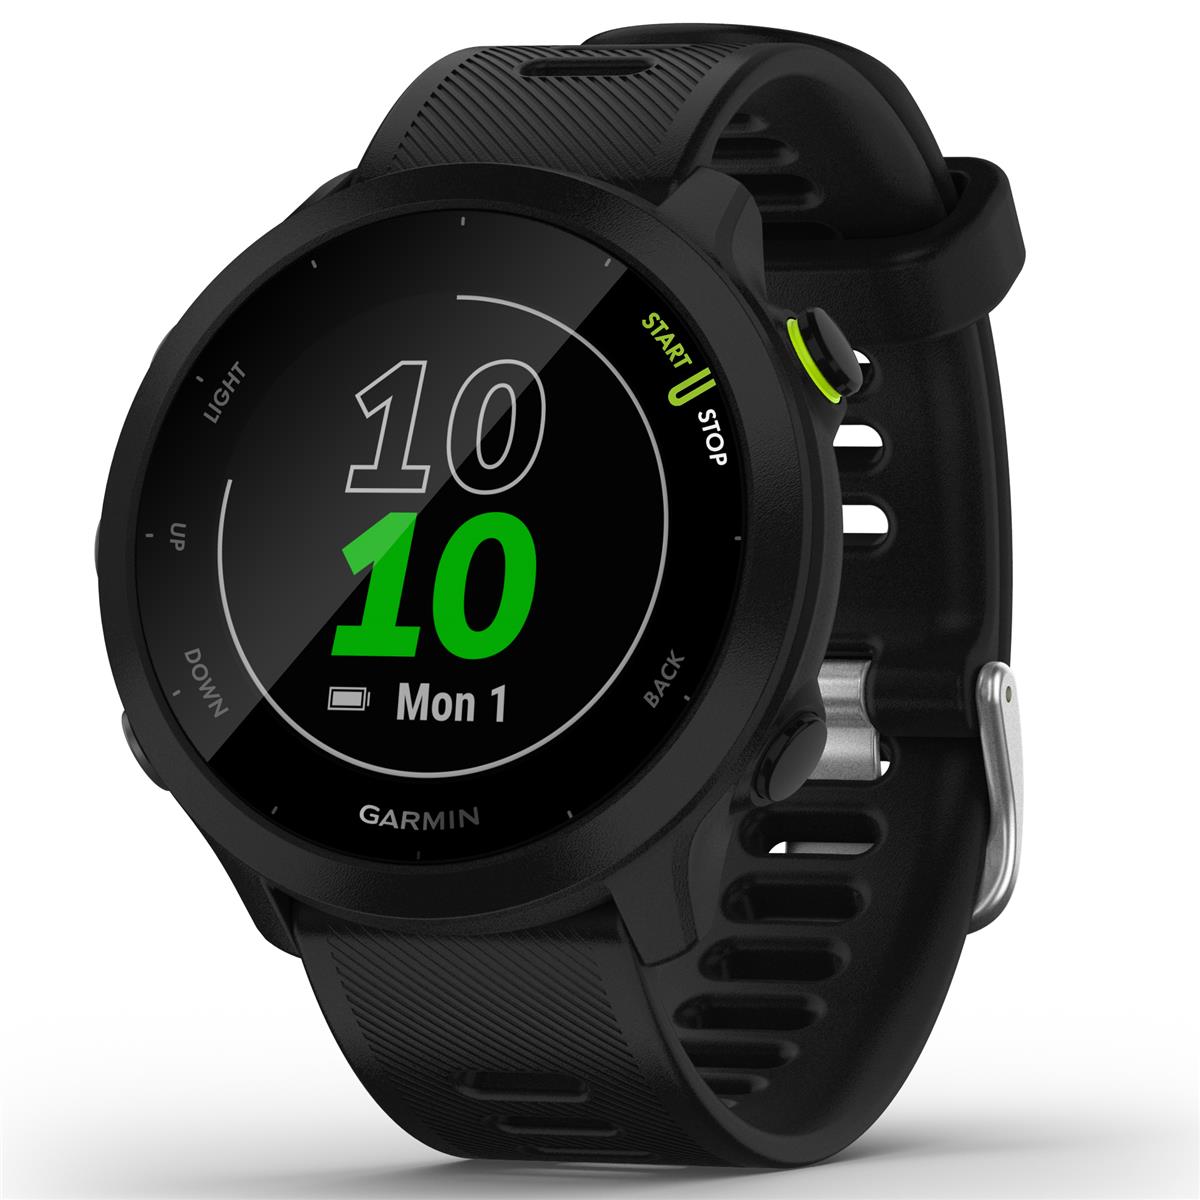 Garmin Forerunner 55 GPS Smartwatch, Black or White, $129.99 (free shipping)